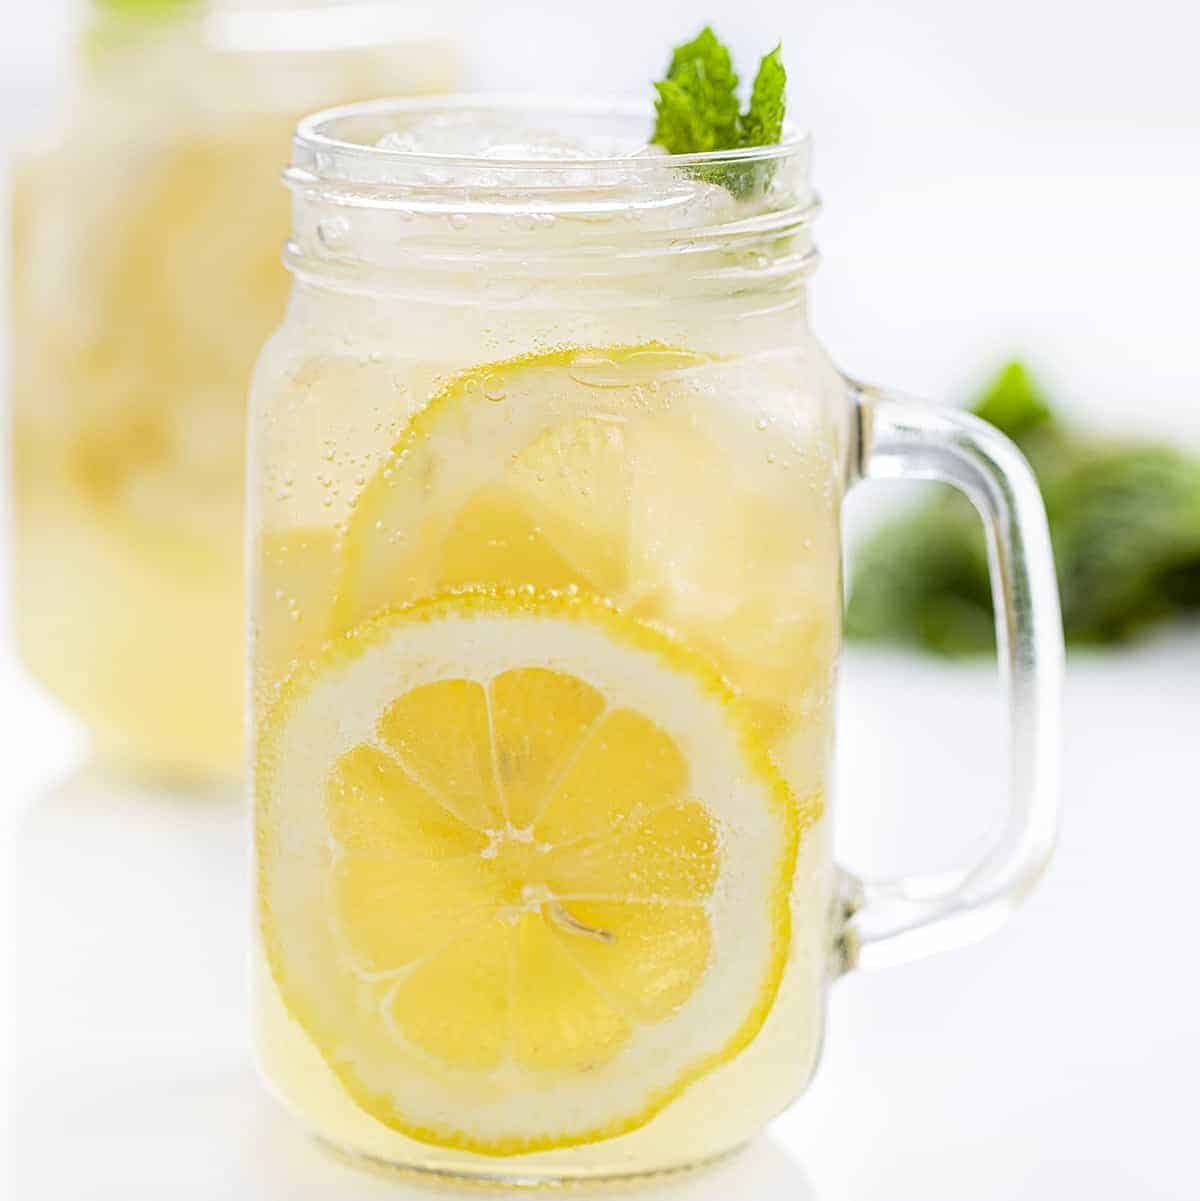 https://iambaker.net/wp-content/uploads/2020/06/minnesota-spiked-lemonade-featured-image.jpg